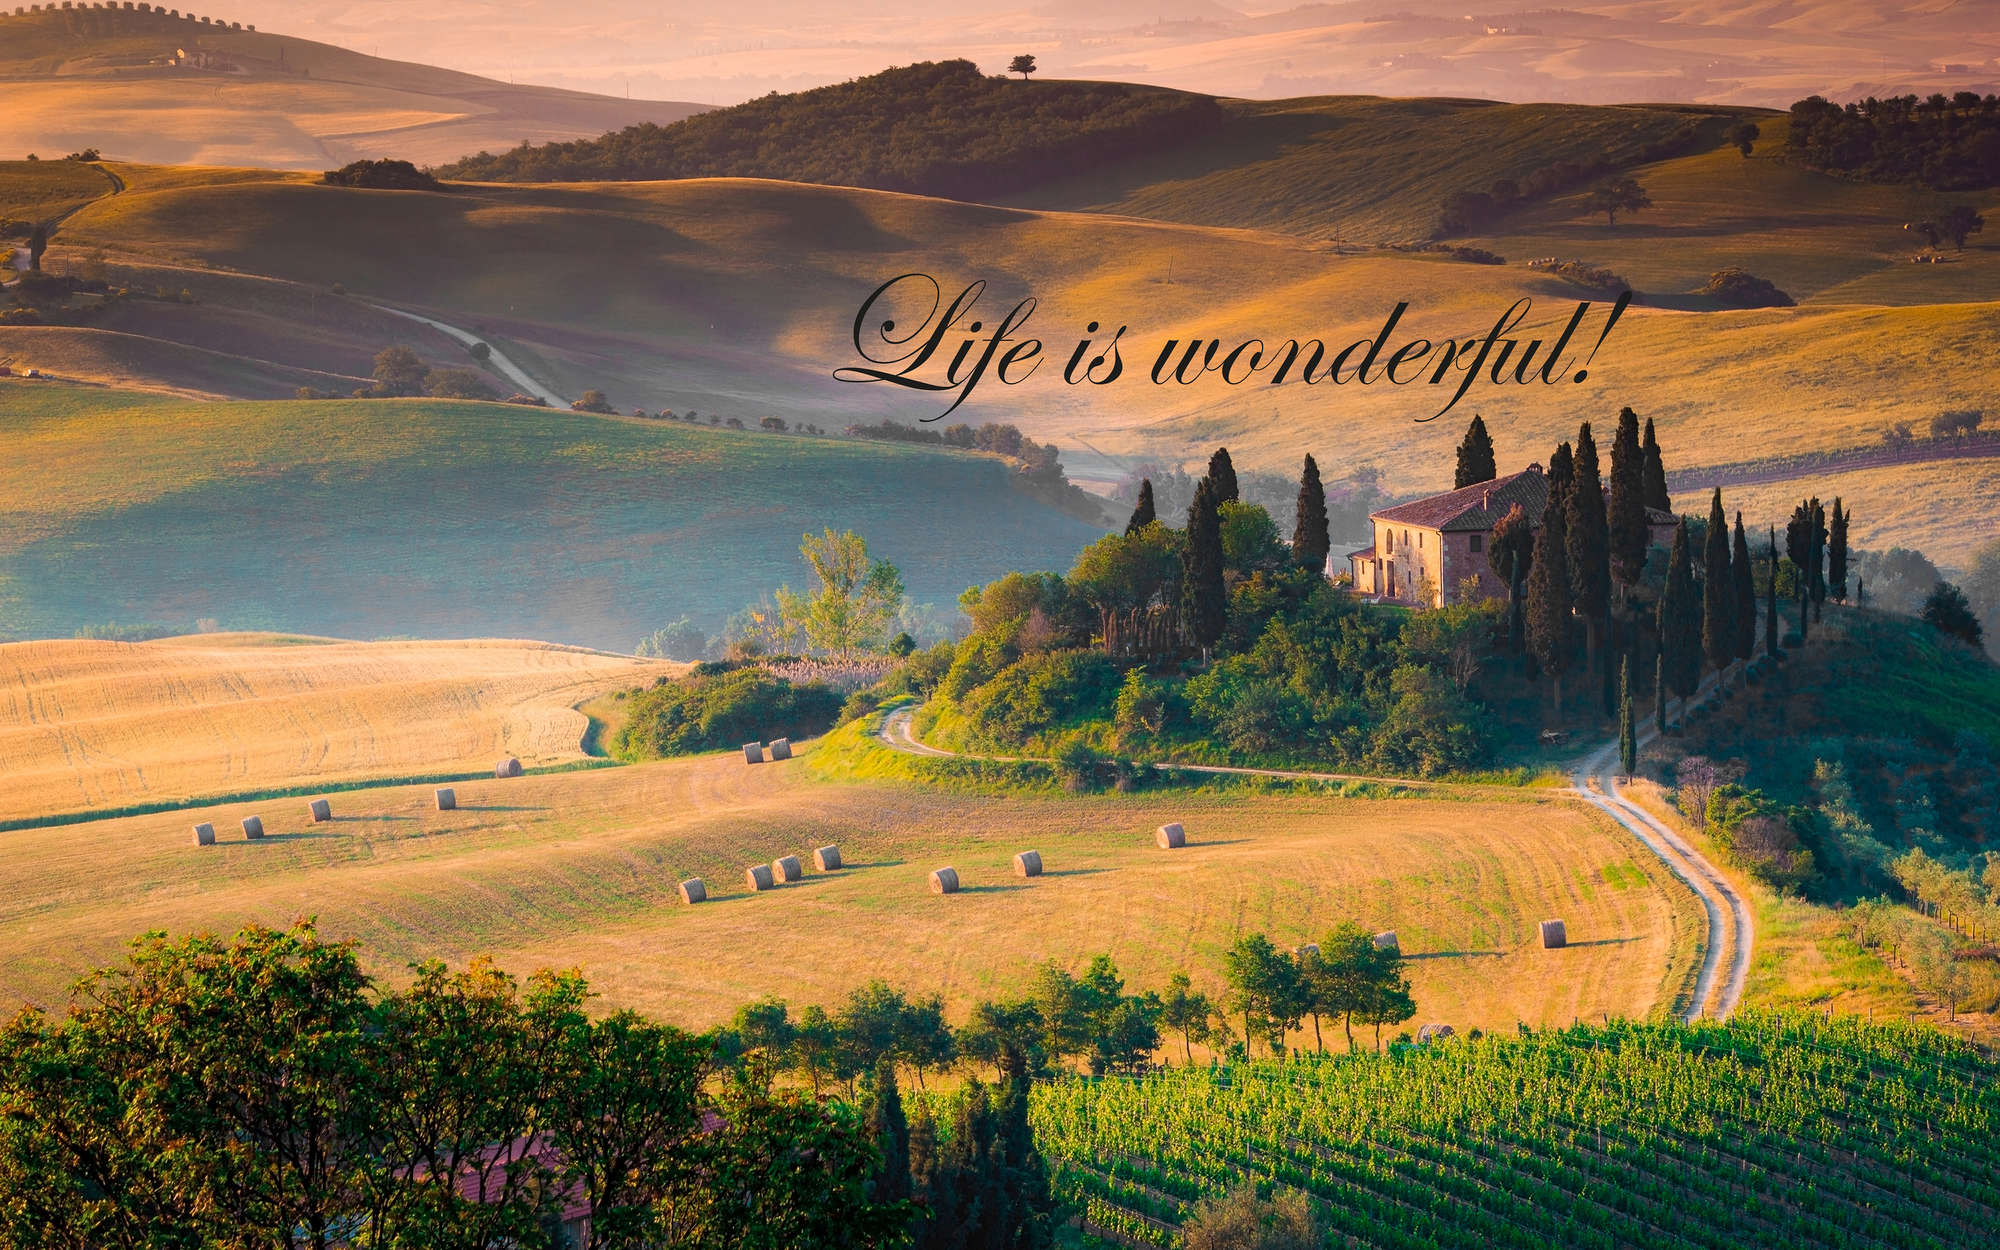             Photo wallpaper Tuscany with writing "Life is wonderful!" - Premium smooth fleece
        